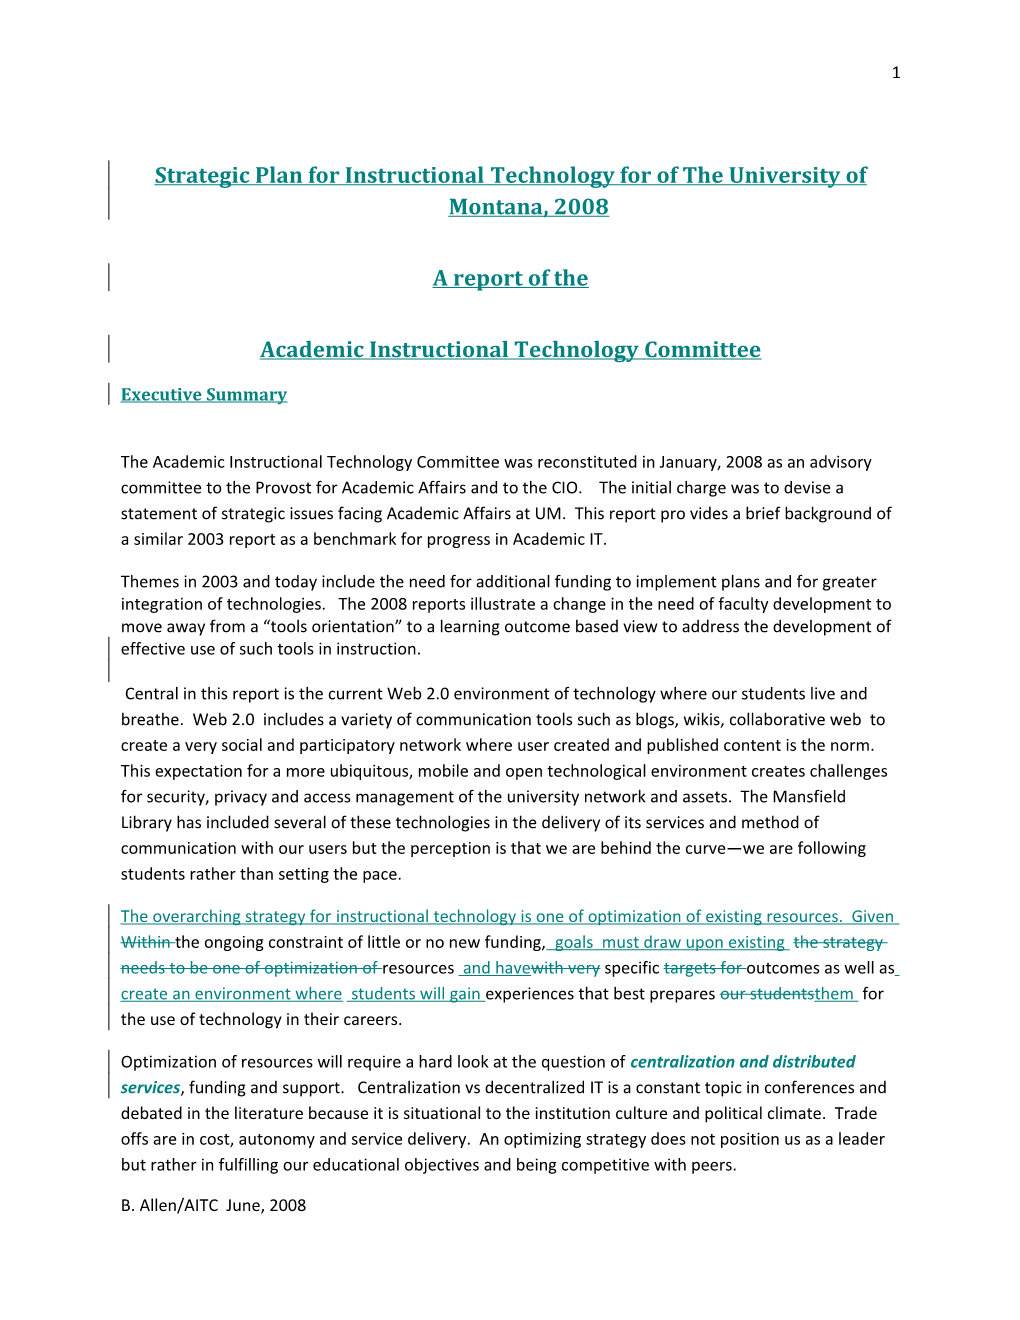 Strategic Plan for Instructional Technology for of the University of Montana, 2008